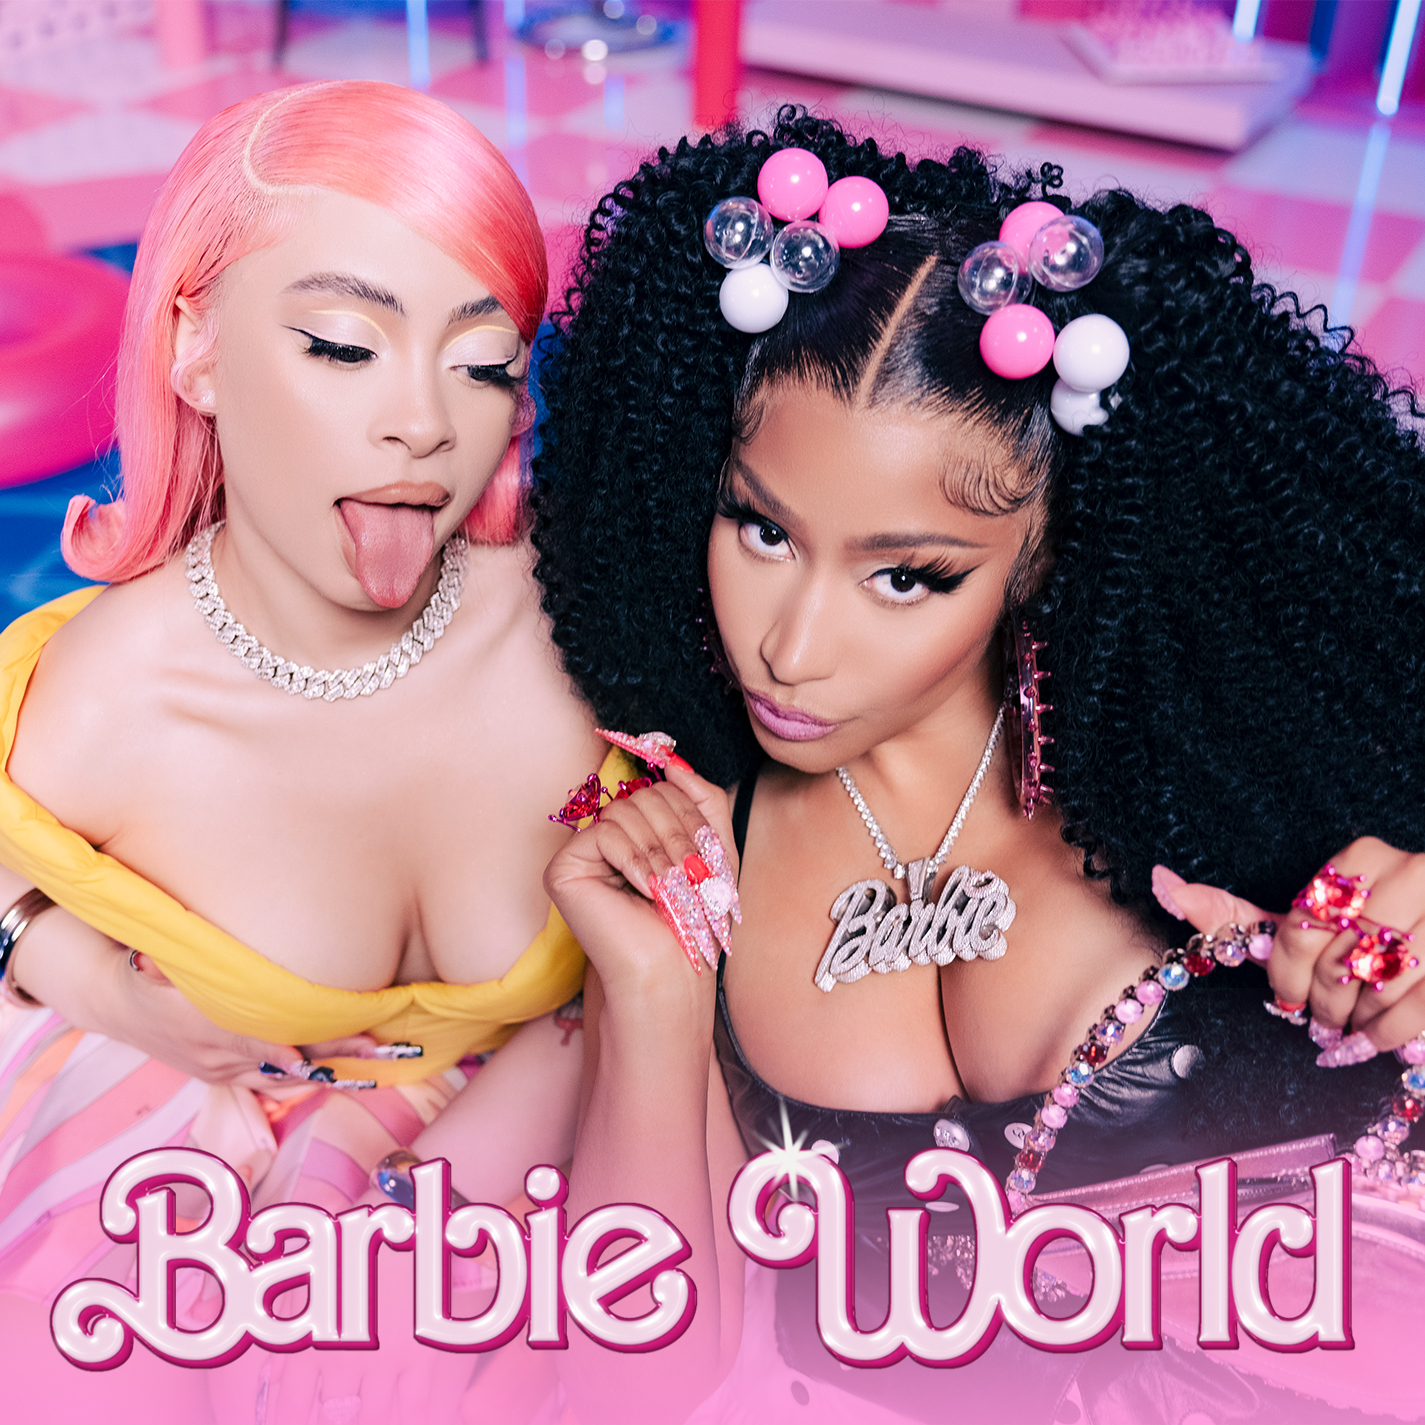 Nicki Minaj and Ice Spice Barbie World Art POP CYBER